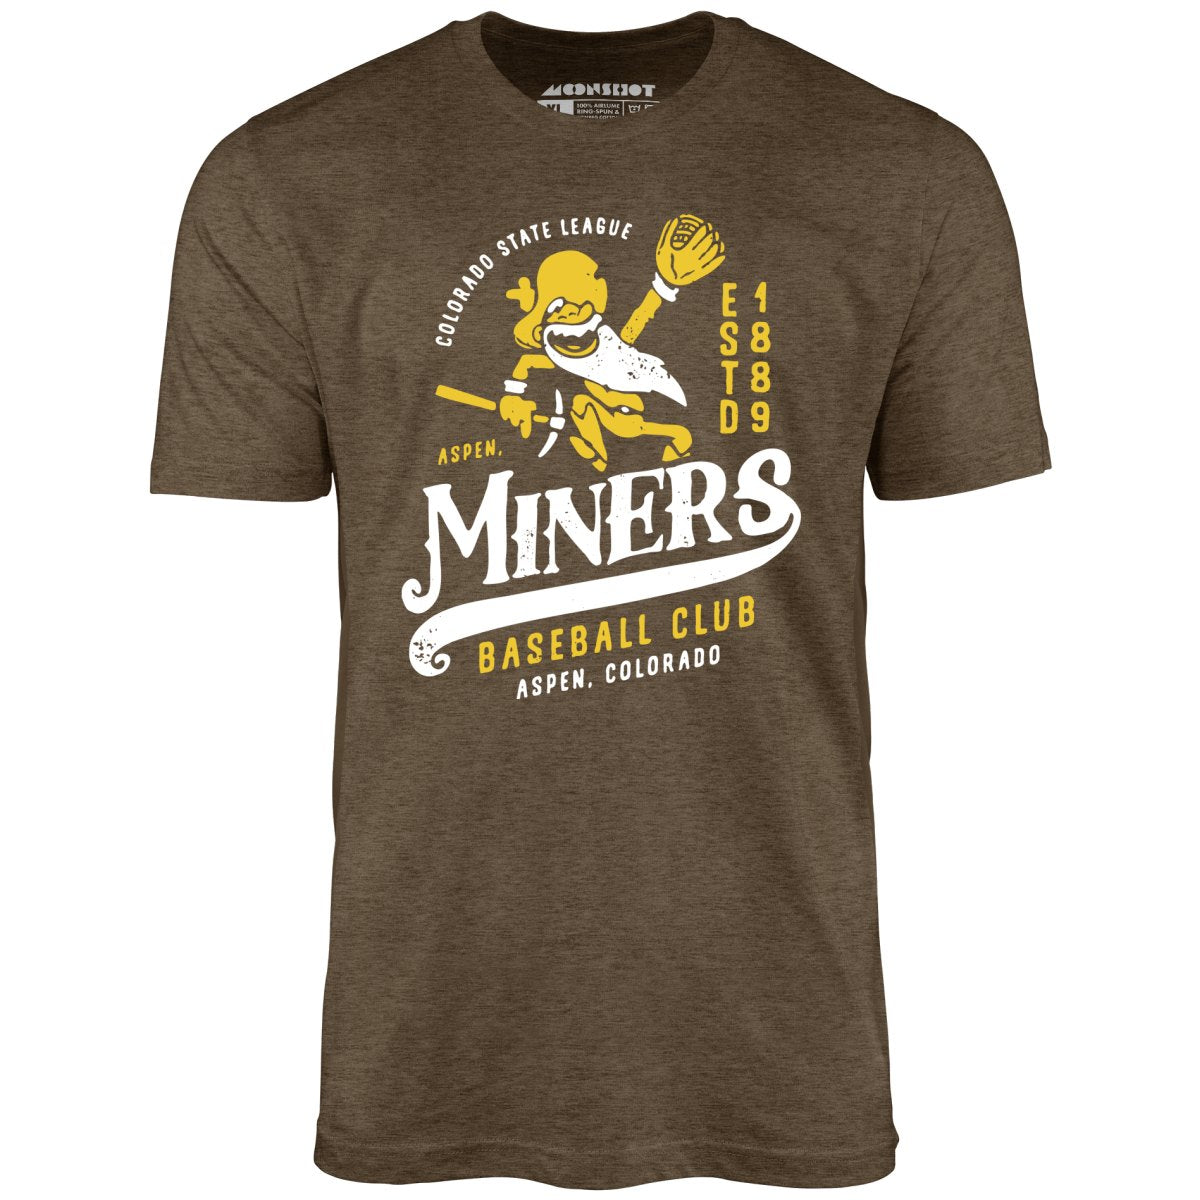 Aspen Miners - Colorado - Vintage Defunct Baseball Teams - Unisex T-Shirt